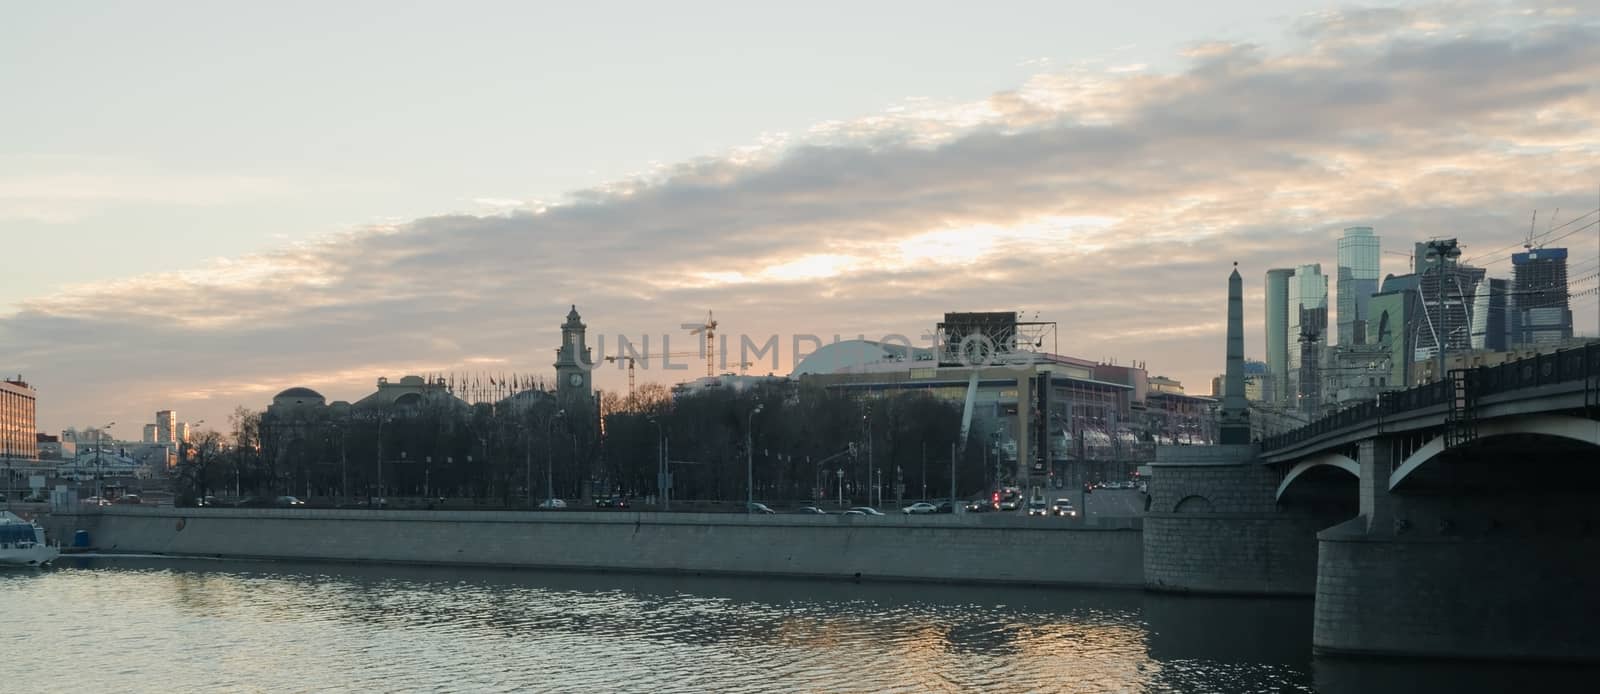 Moscow at sunset. View of the embankment  Berezhkovskaya and the Kiev railway station.